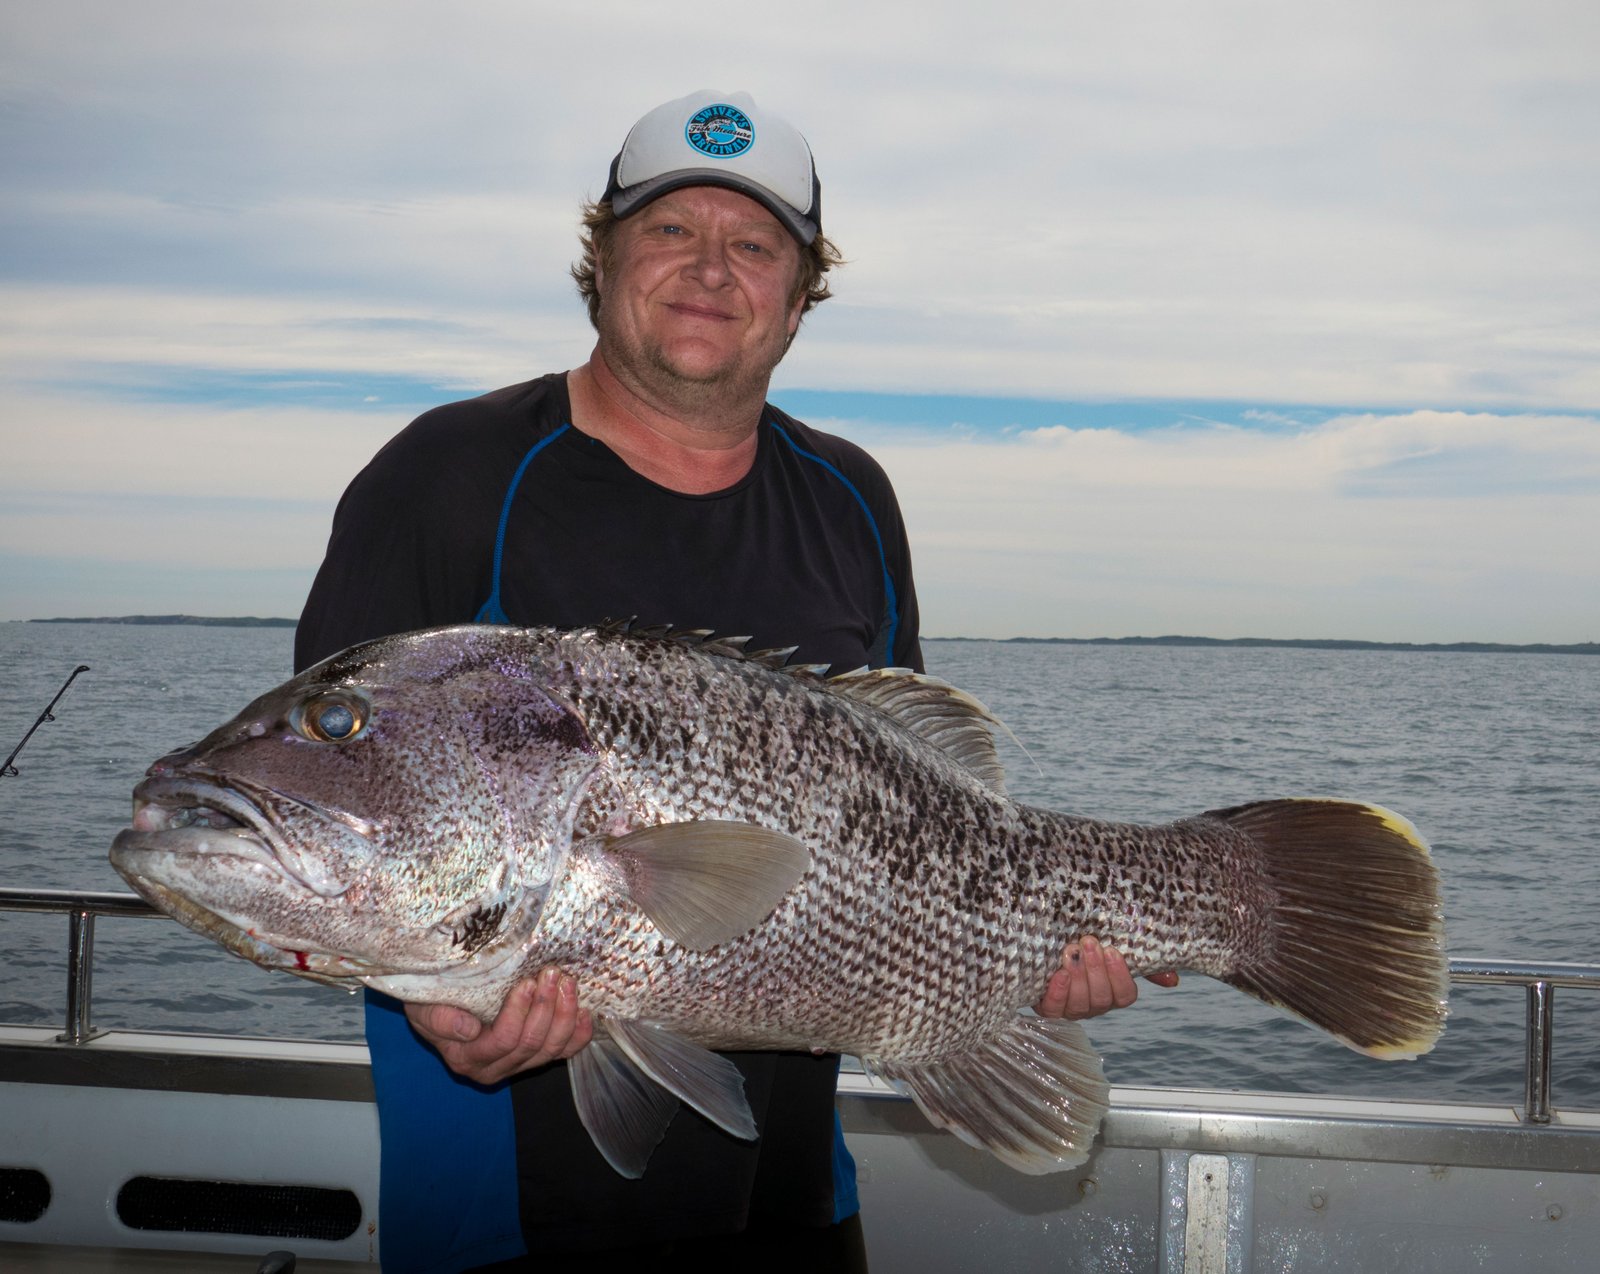 Steve Correia with a 40 pound West Australian Dhufish